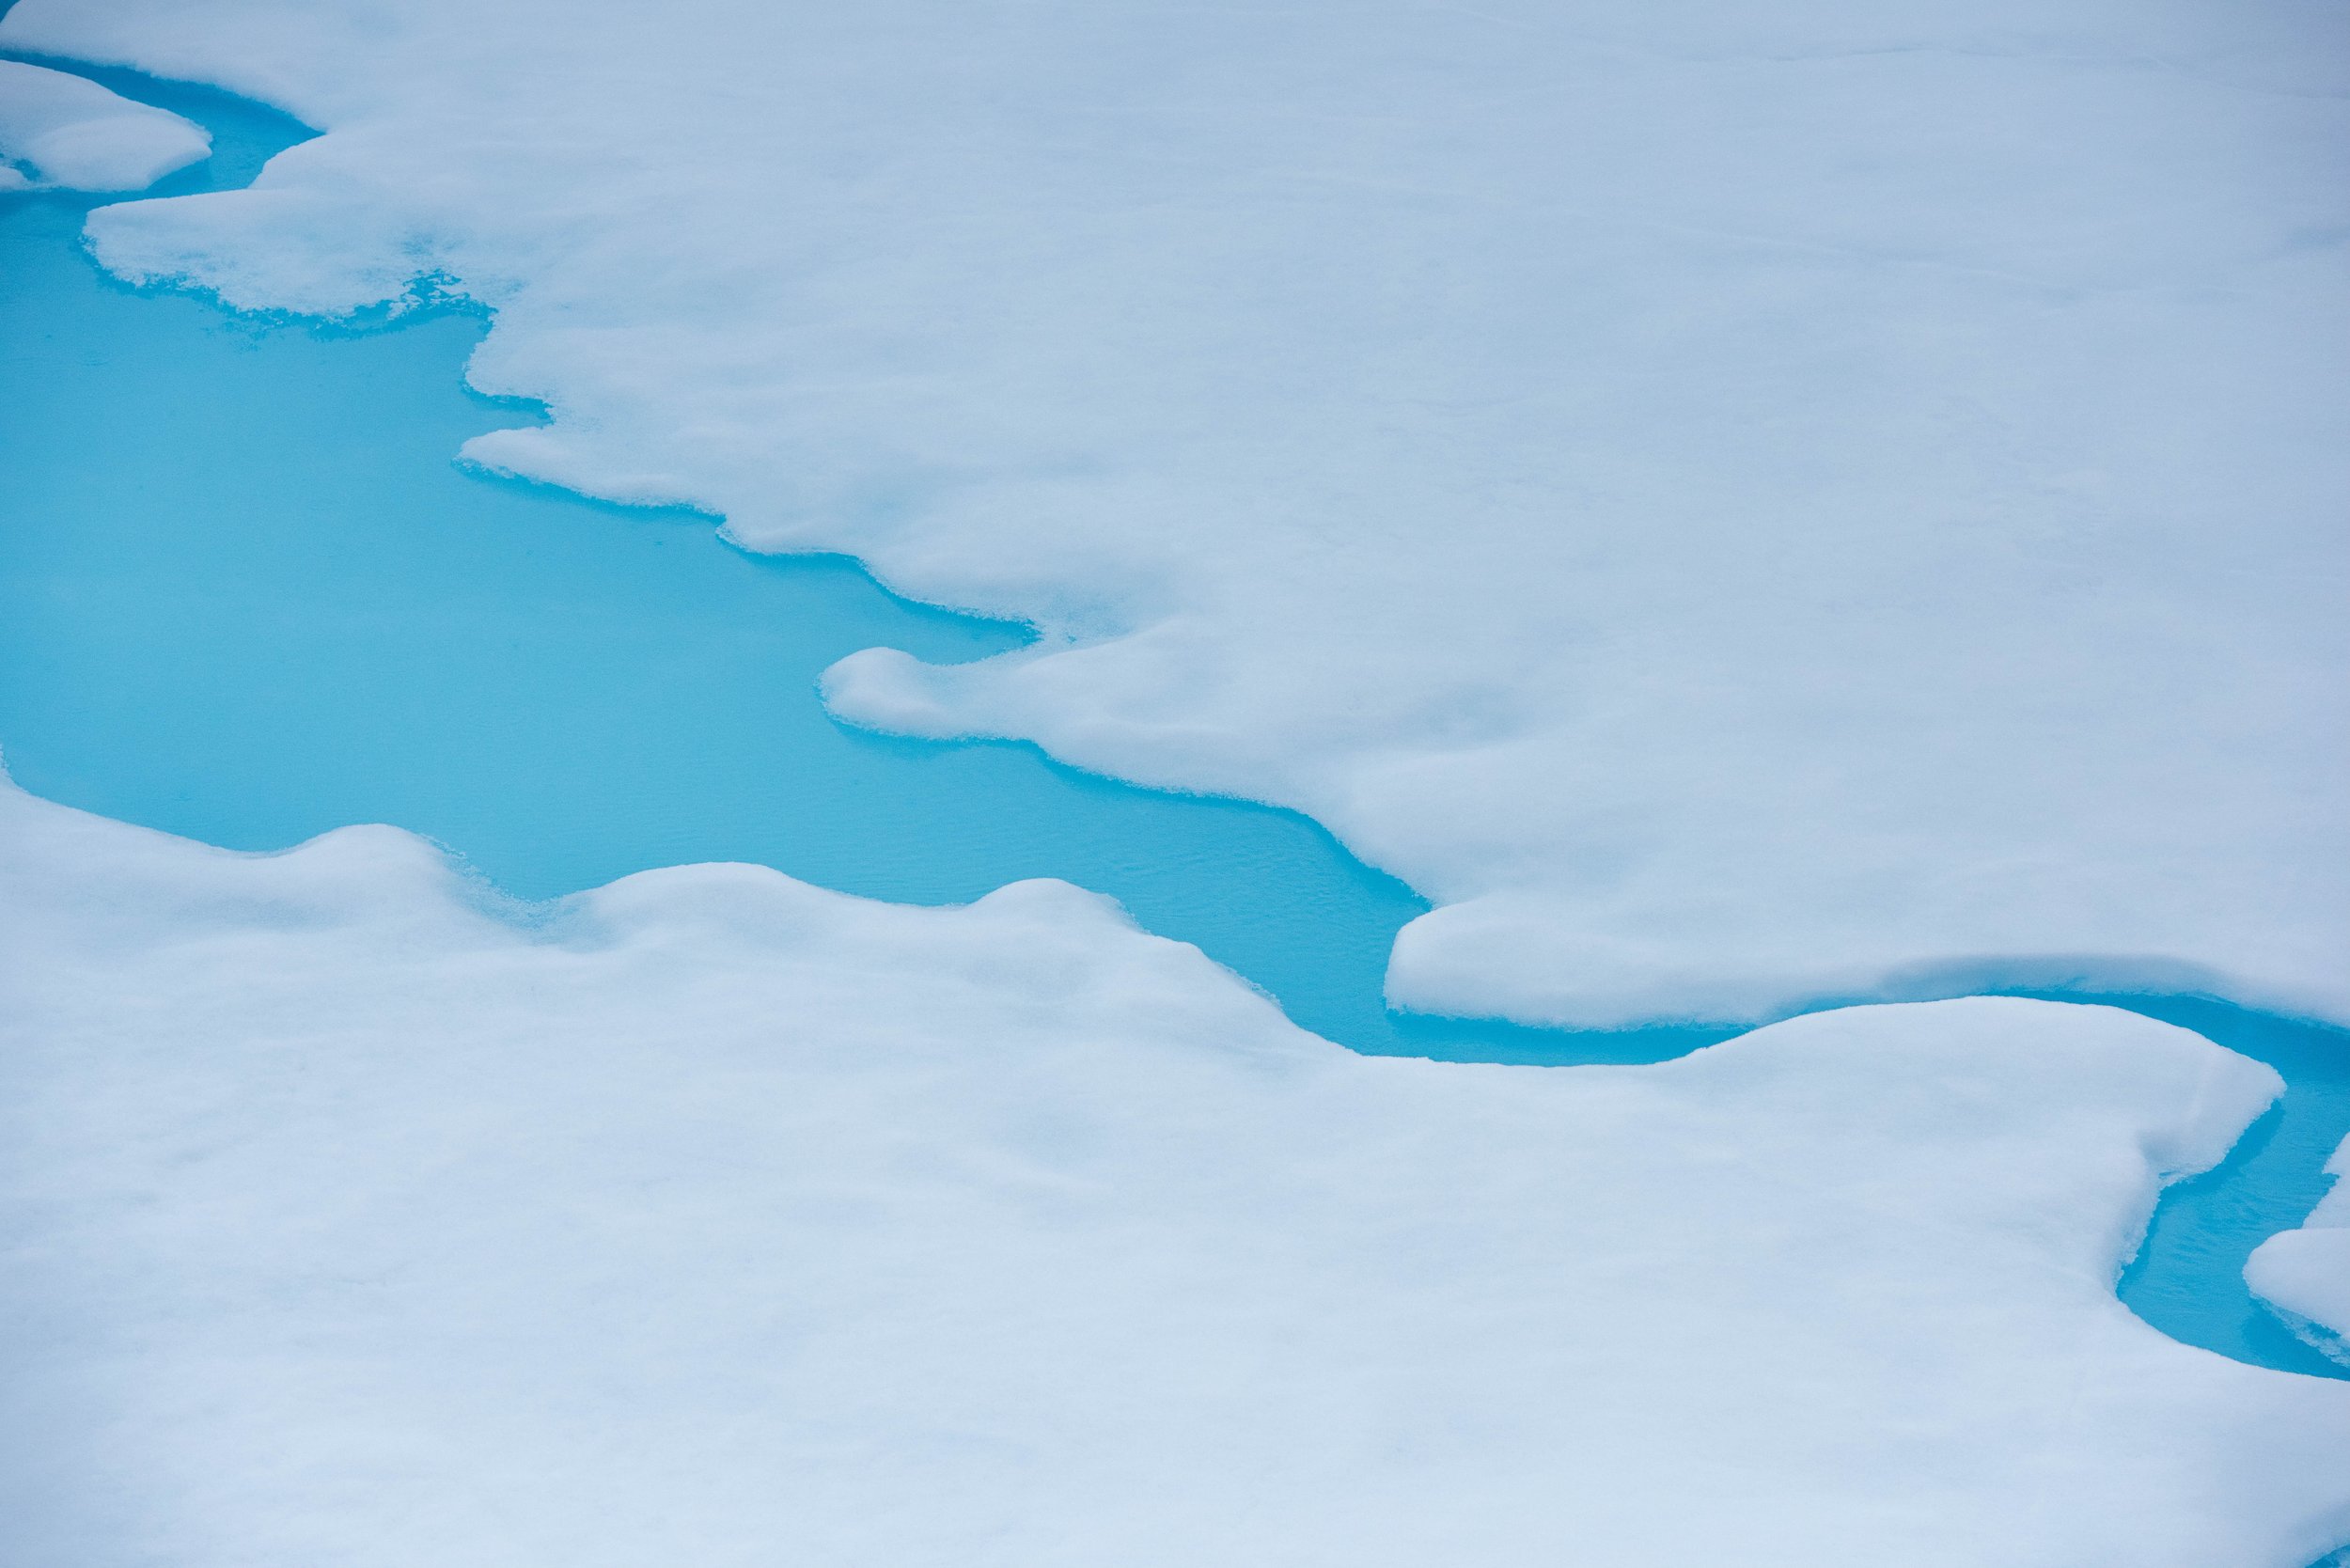 Melting Pond, Antarctica